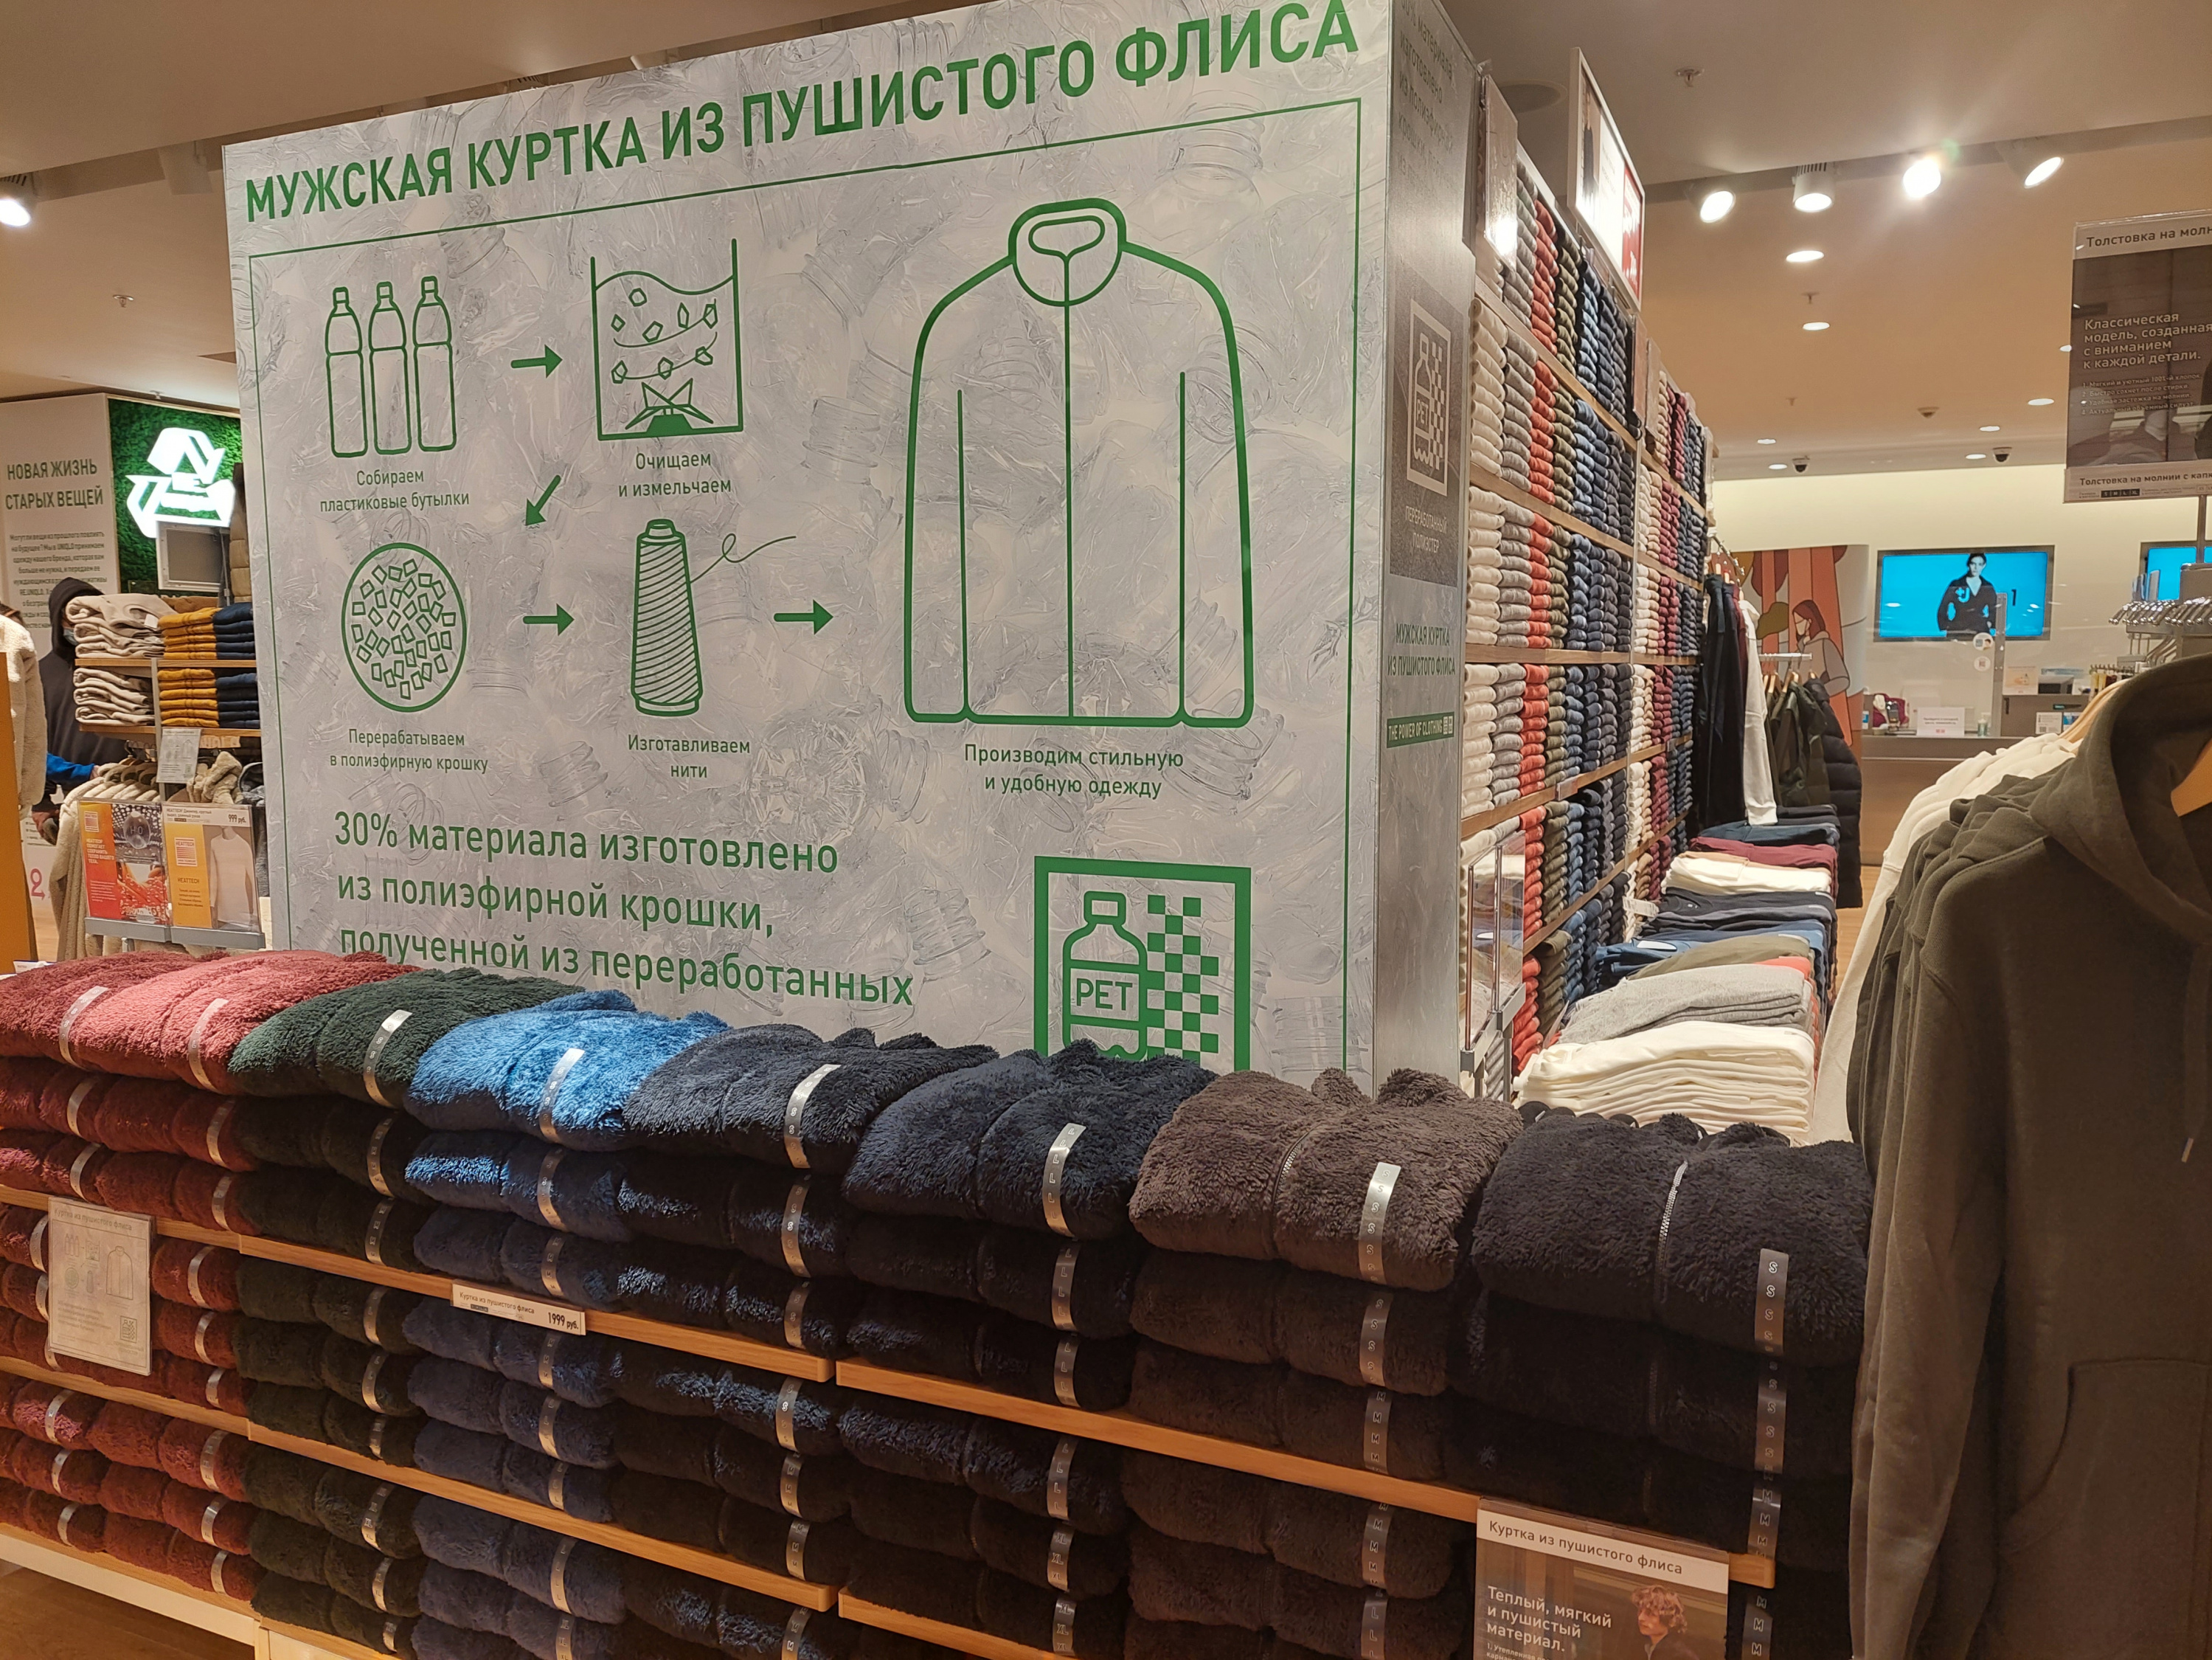 Фото: Retail.ru